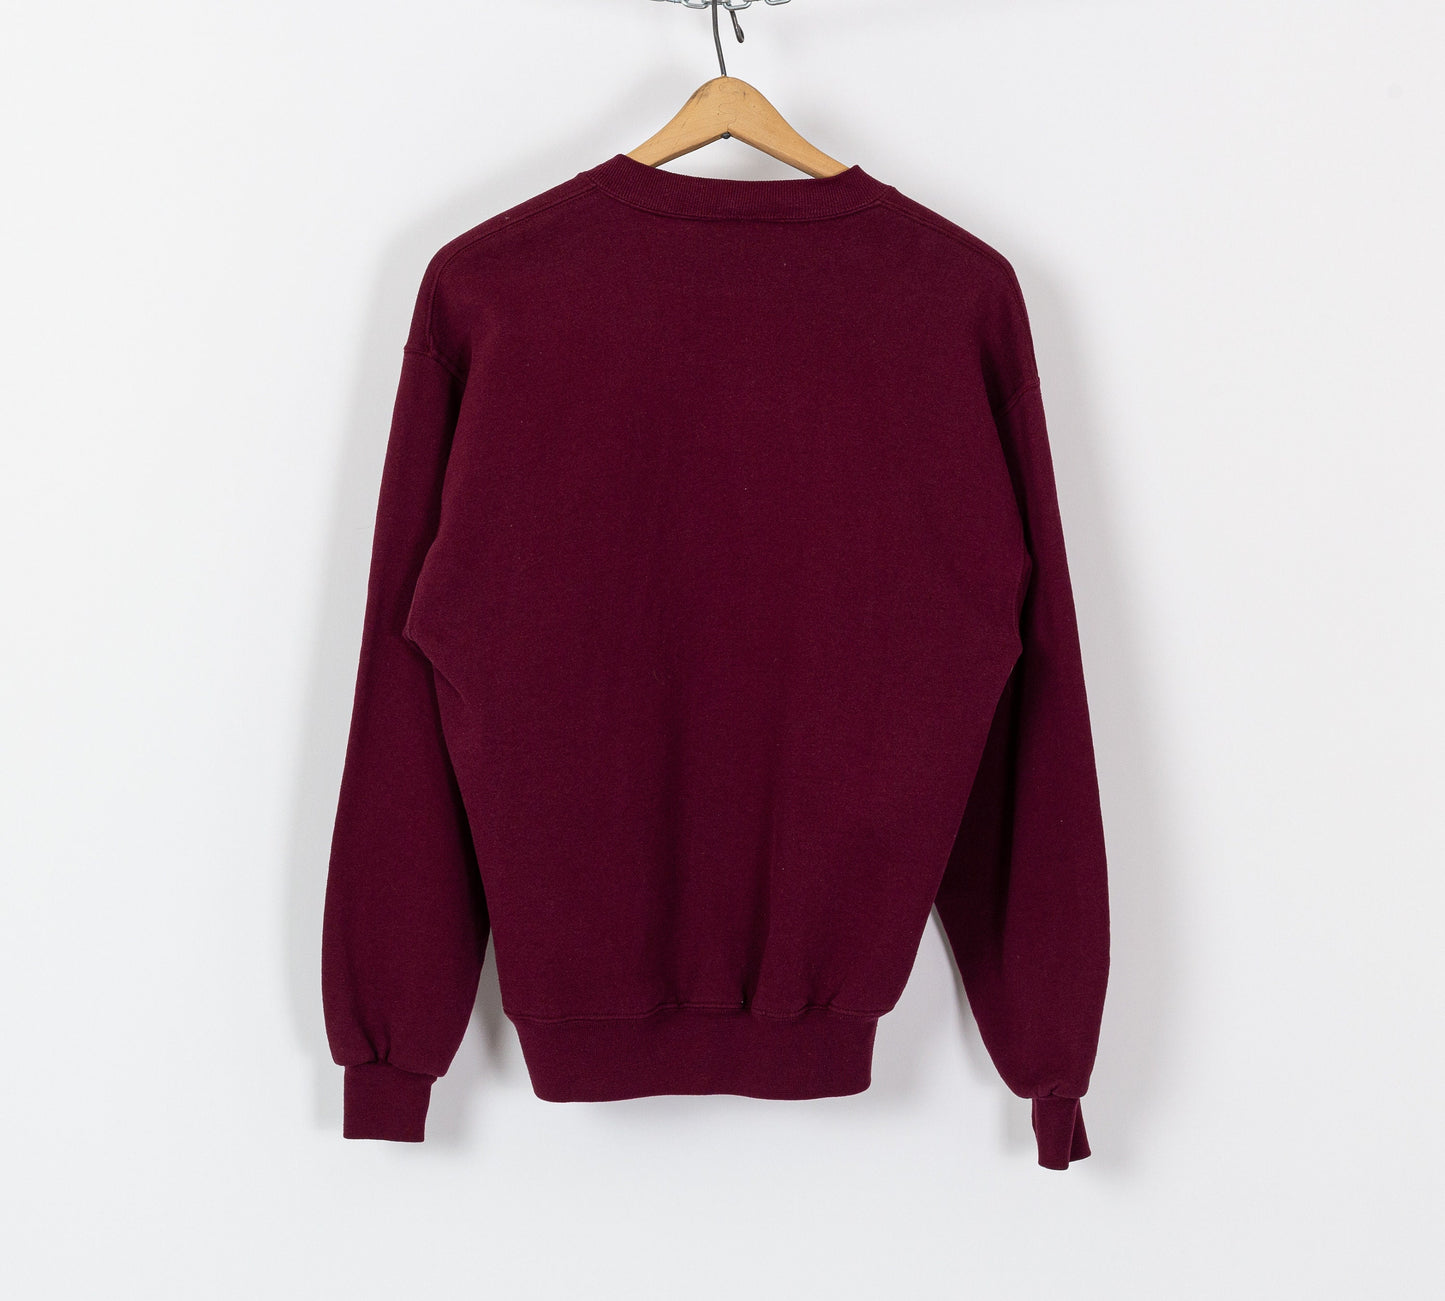 90s Stanford University Sweatshirt - Medium 